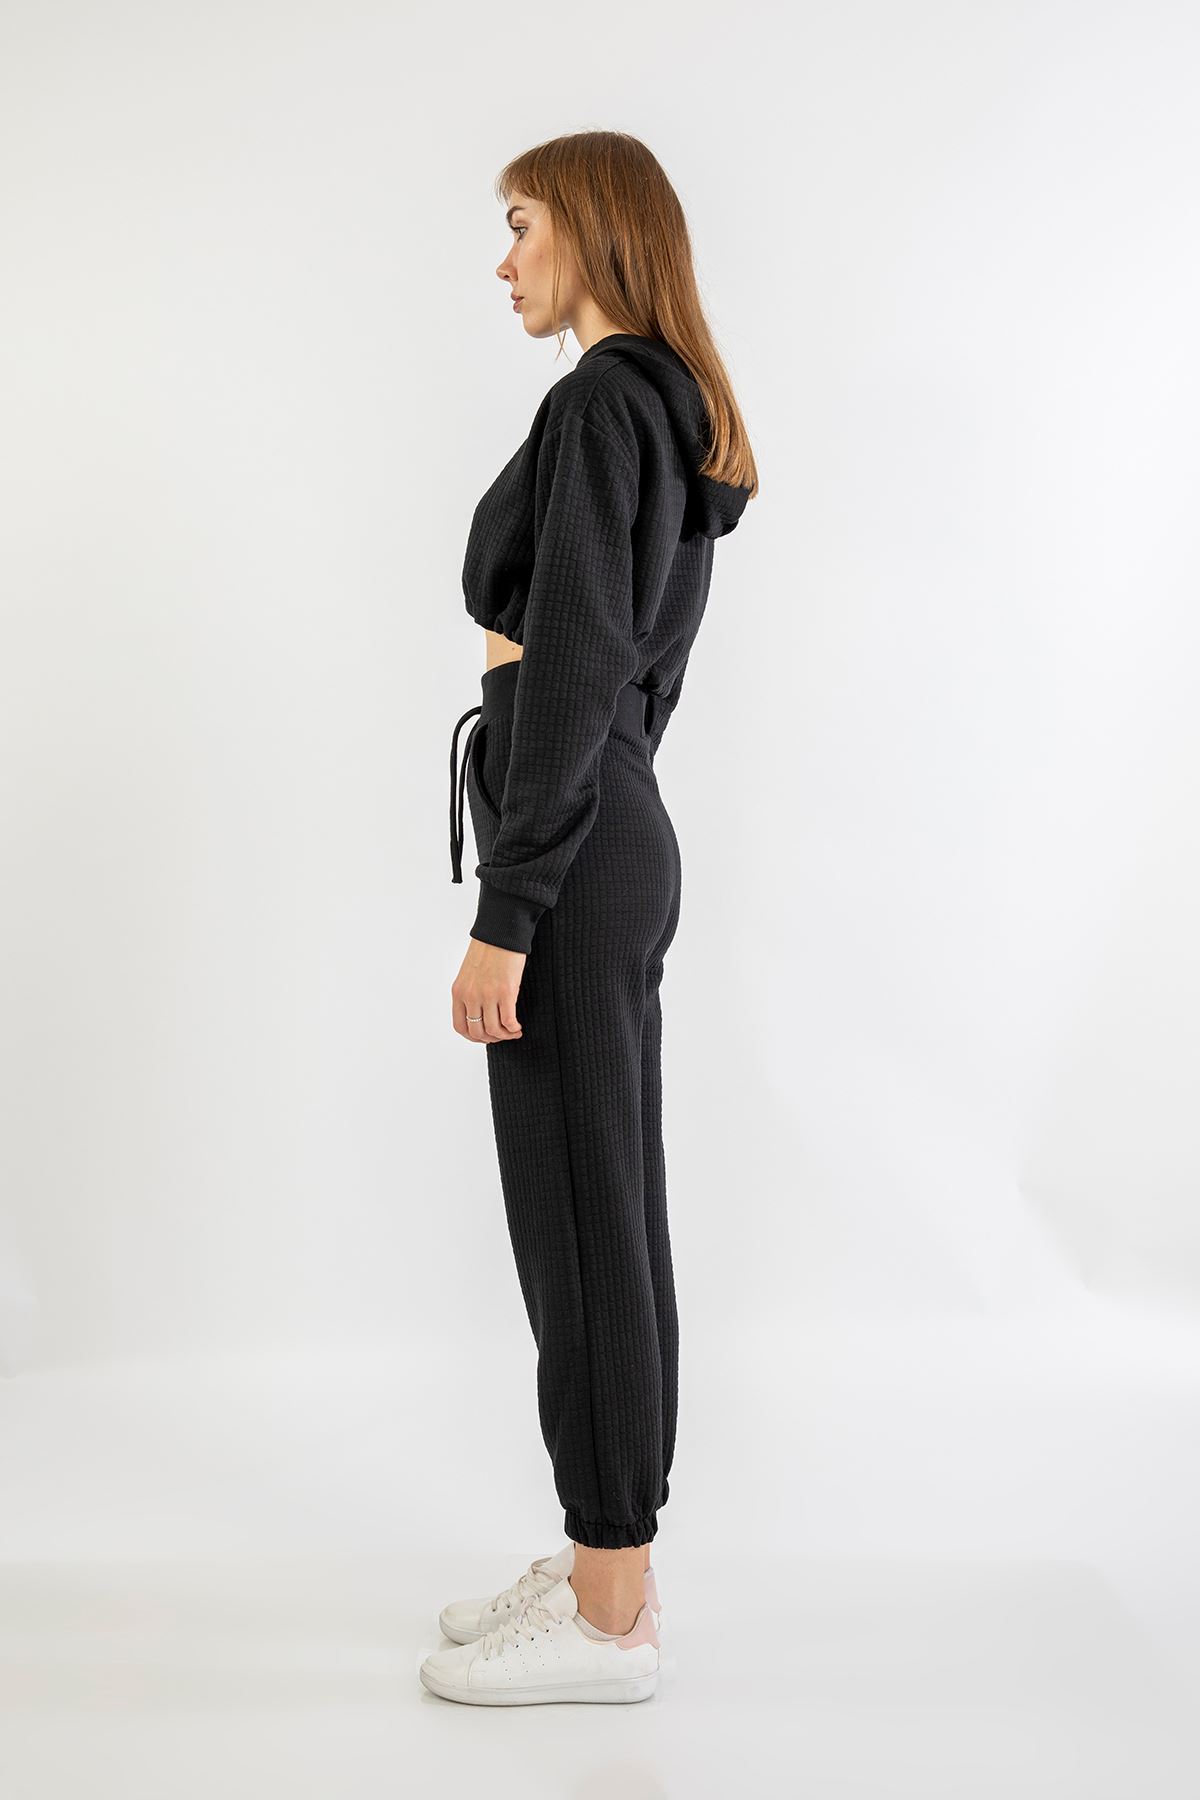 Honeycomb Fabric Long Sleeve Hooded Comfy Women Crop - Black